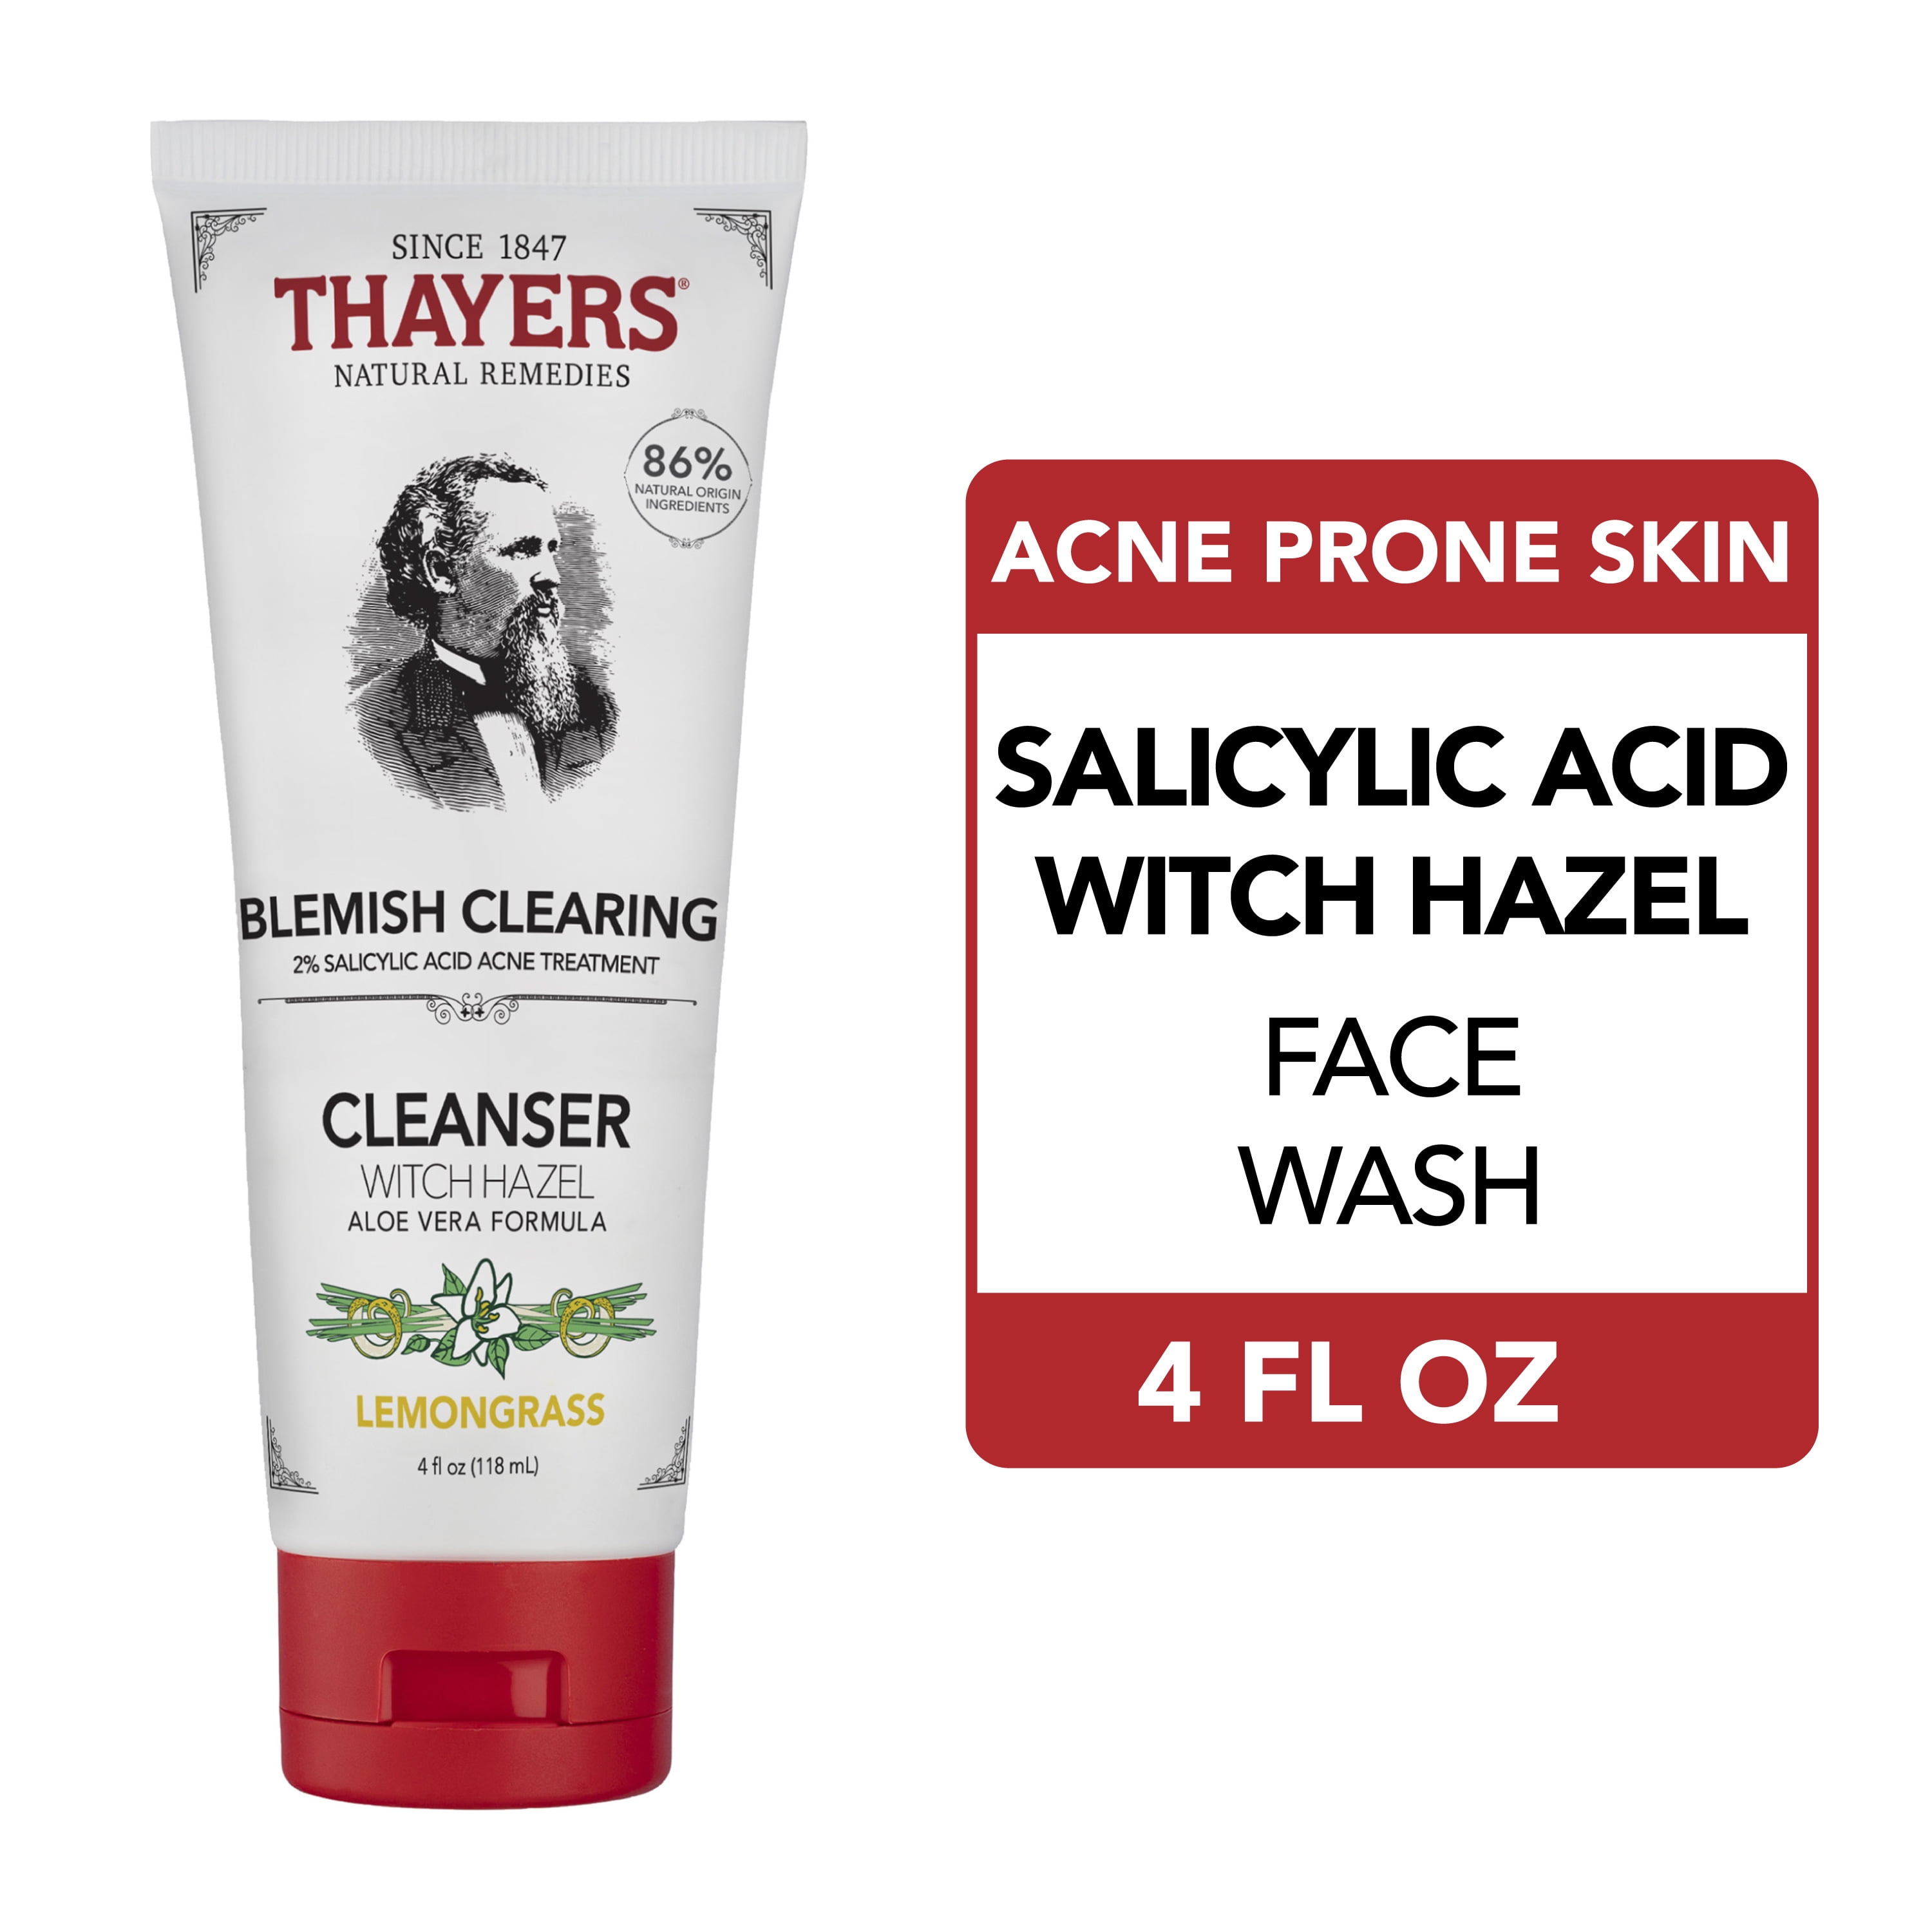 Thayers Blemish Clearing Salicylic Acid and Witch Hazel Face Wash, 4 fl oz